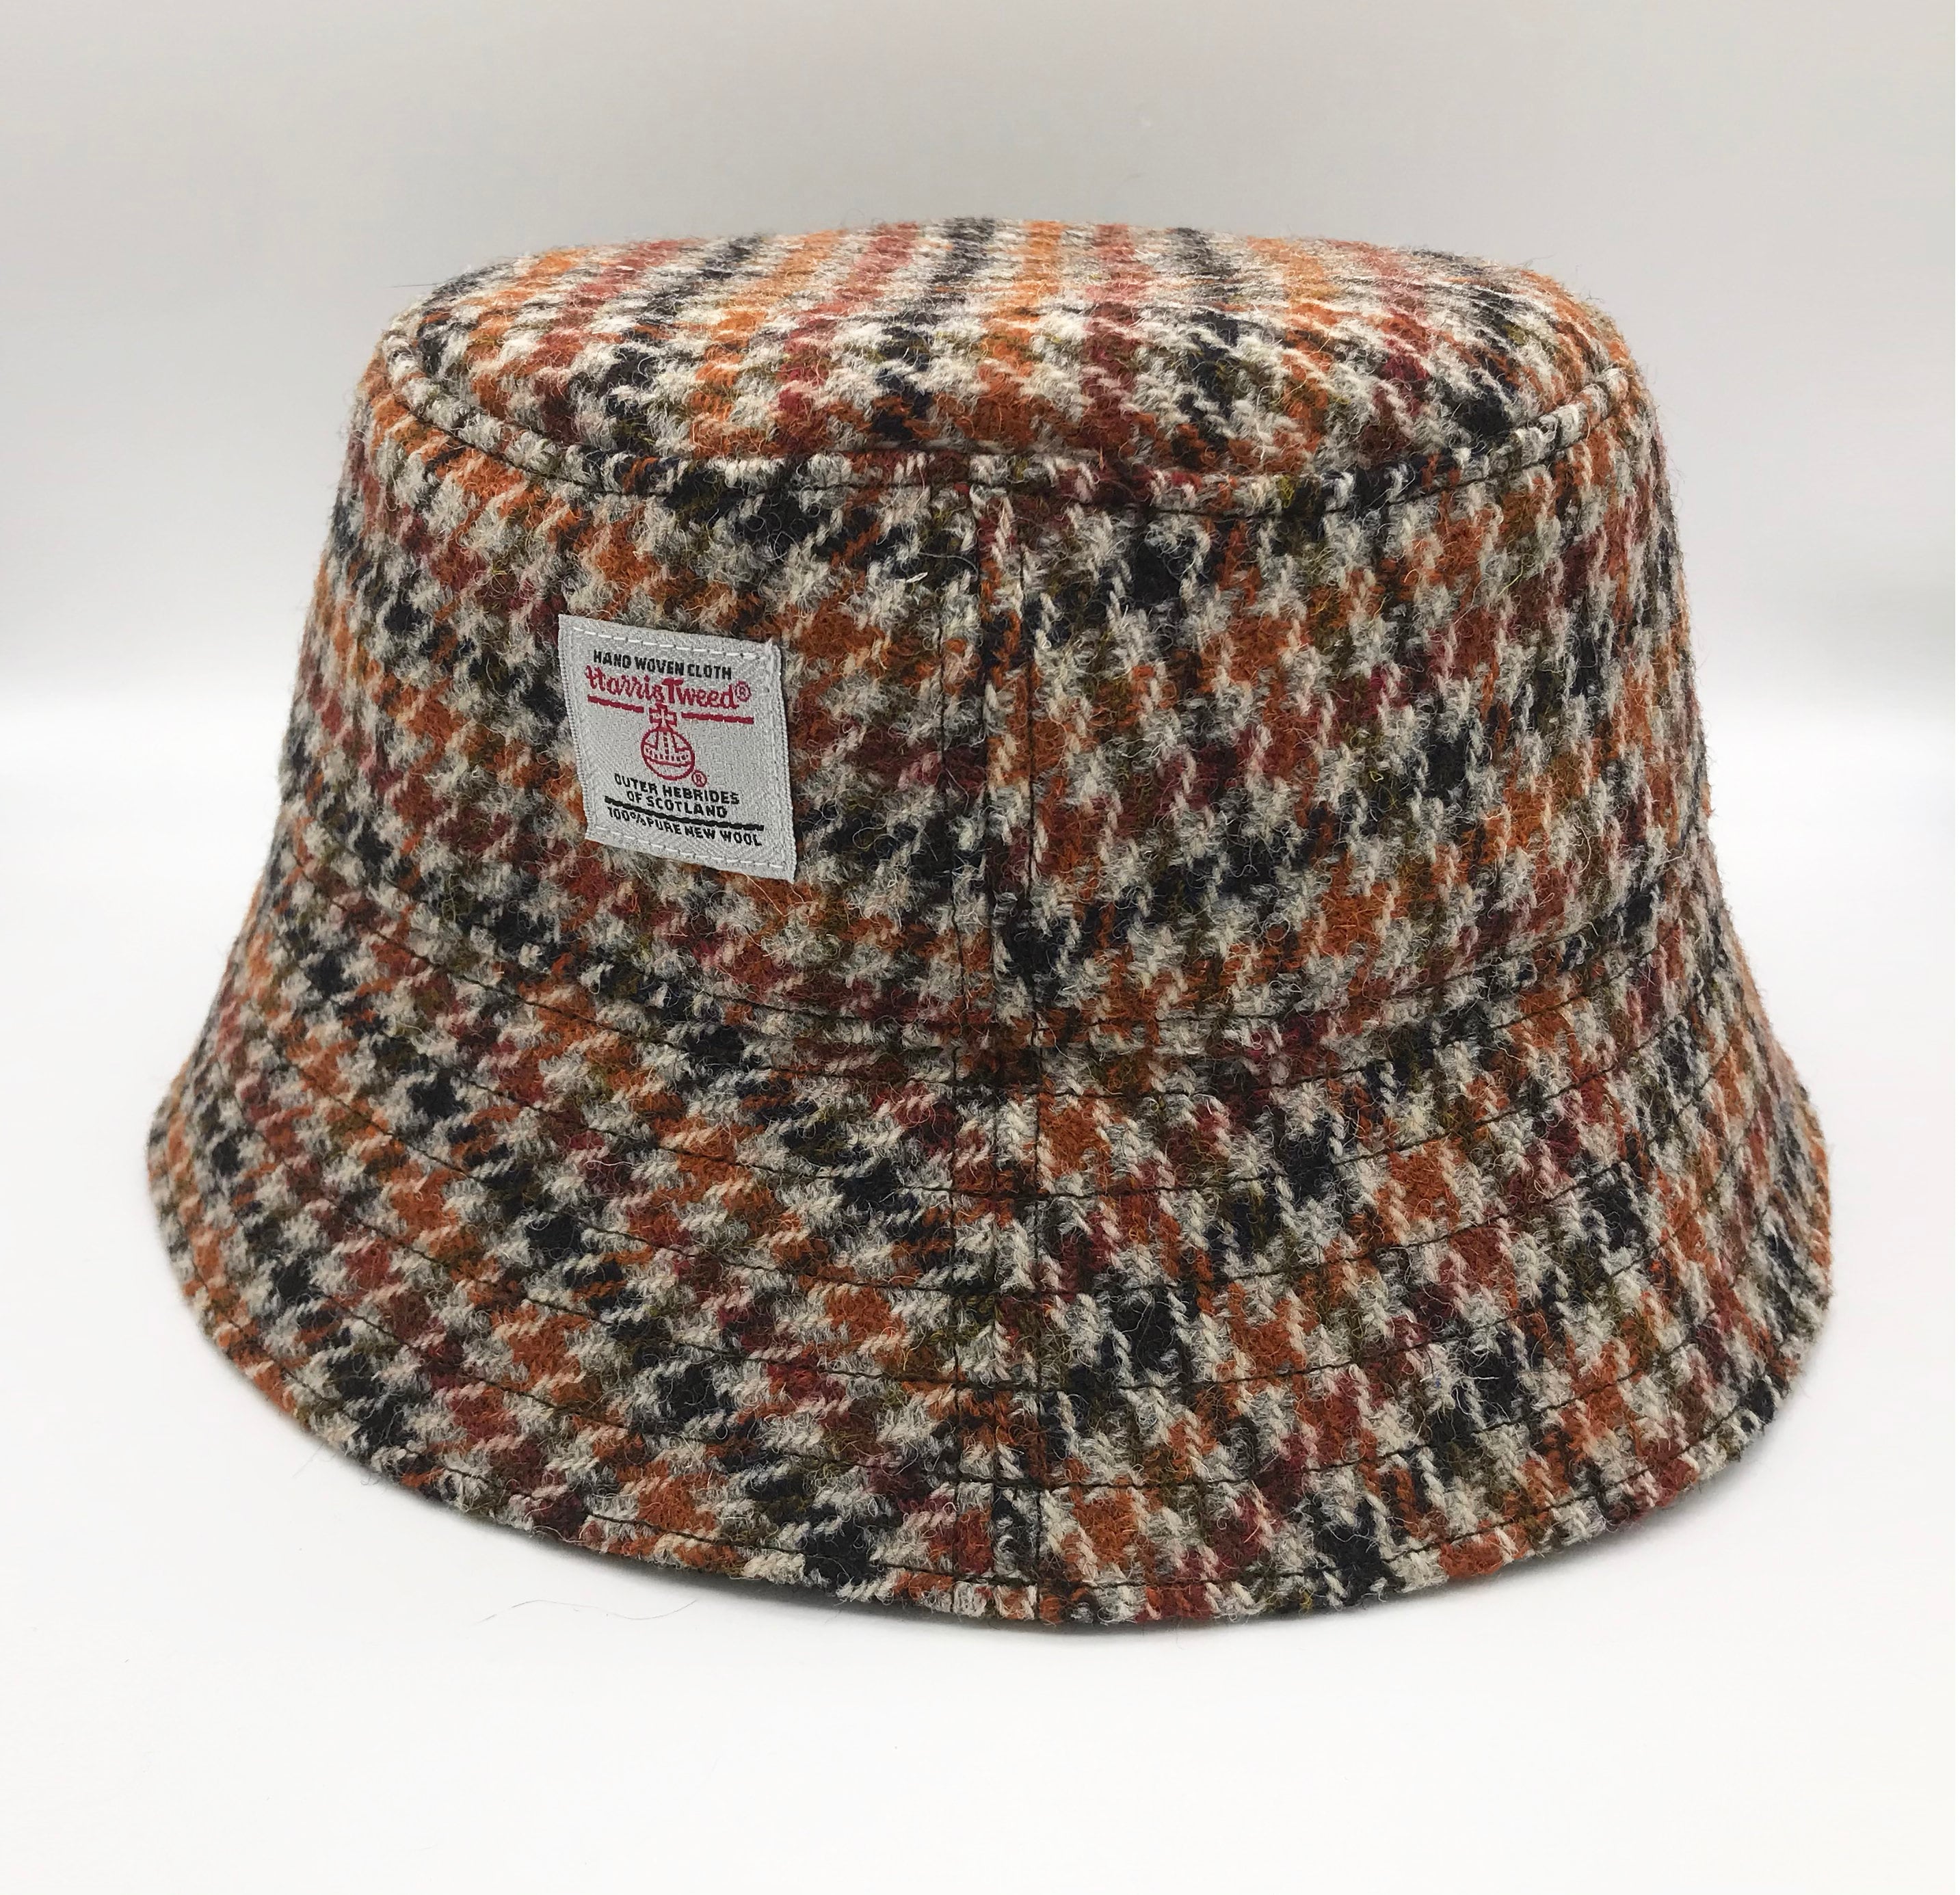 Handmade Bucket Hat, 70's Print Hat, Brown Fishing Hat, Small Hat